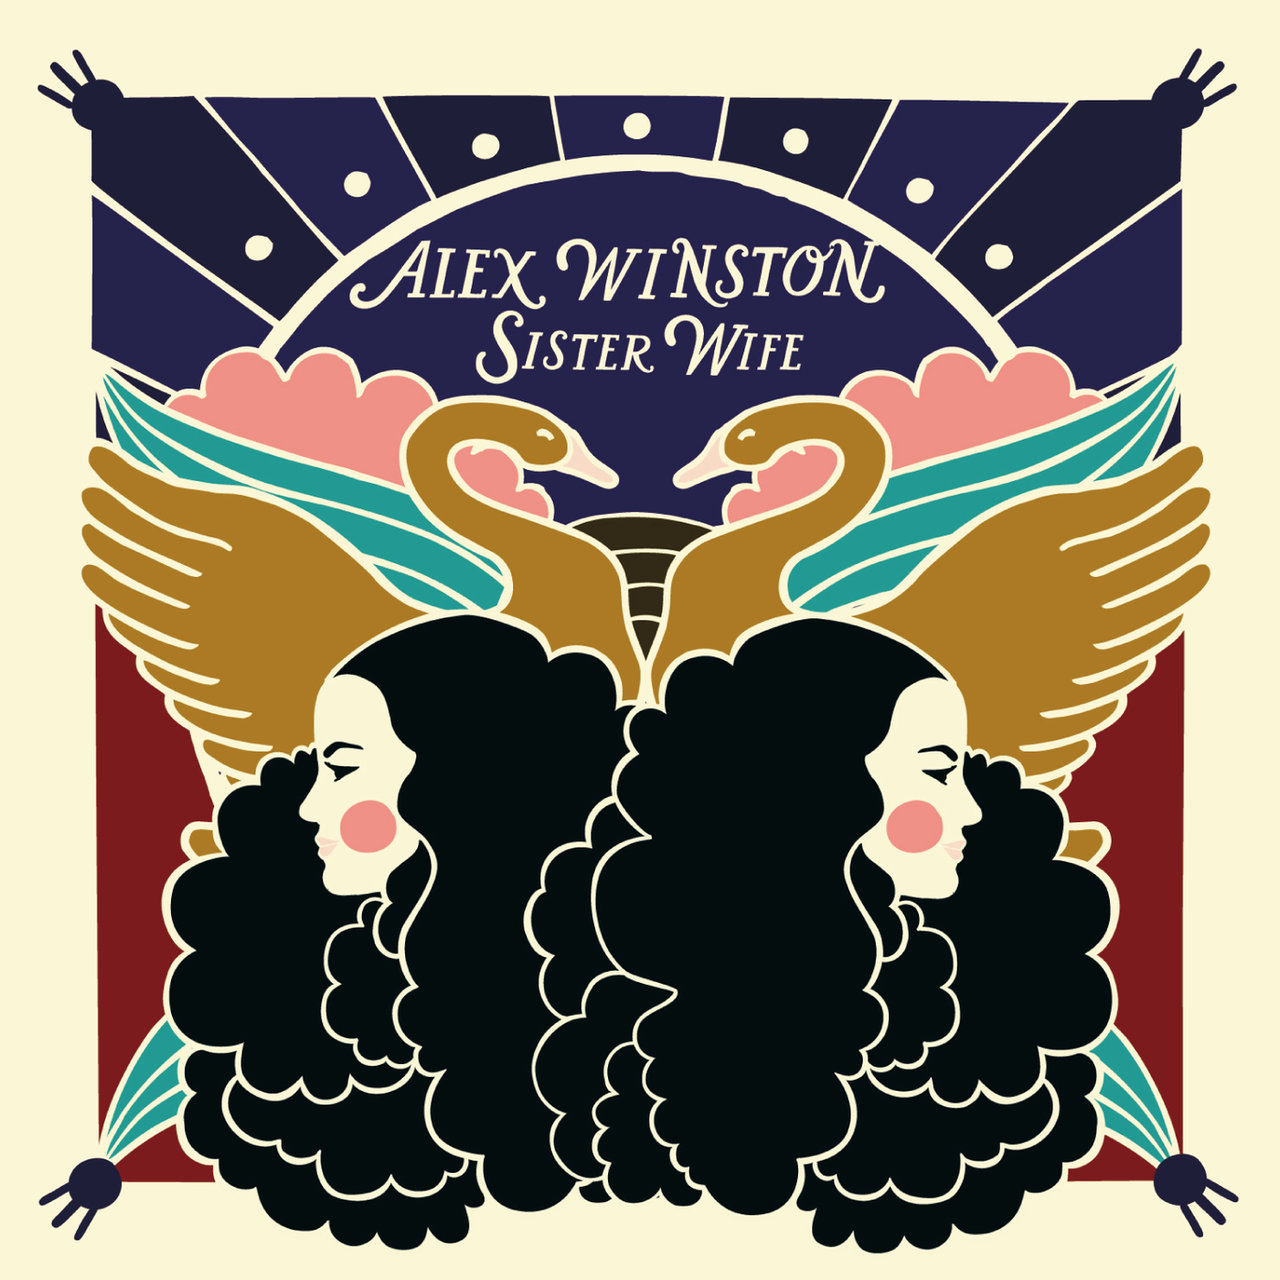 Alex Winston Sister Wife cover artwork